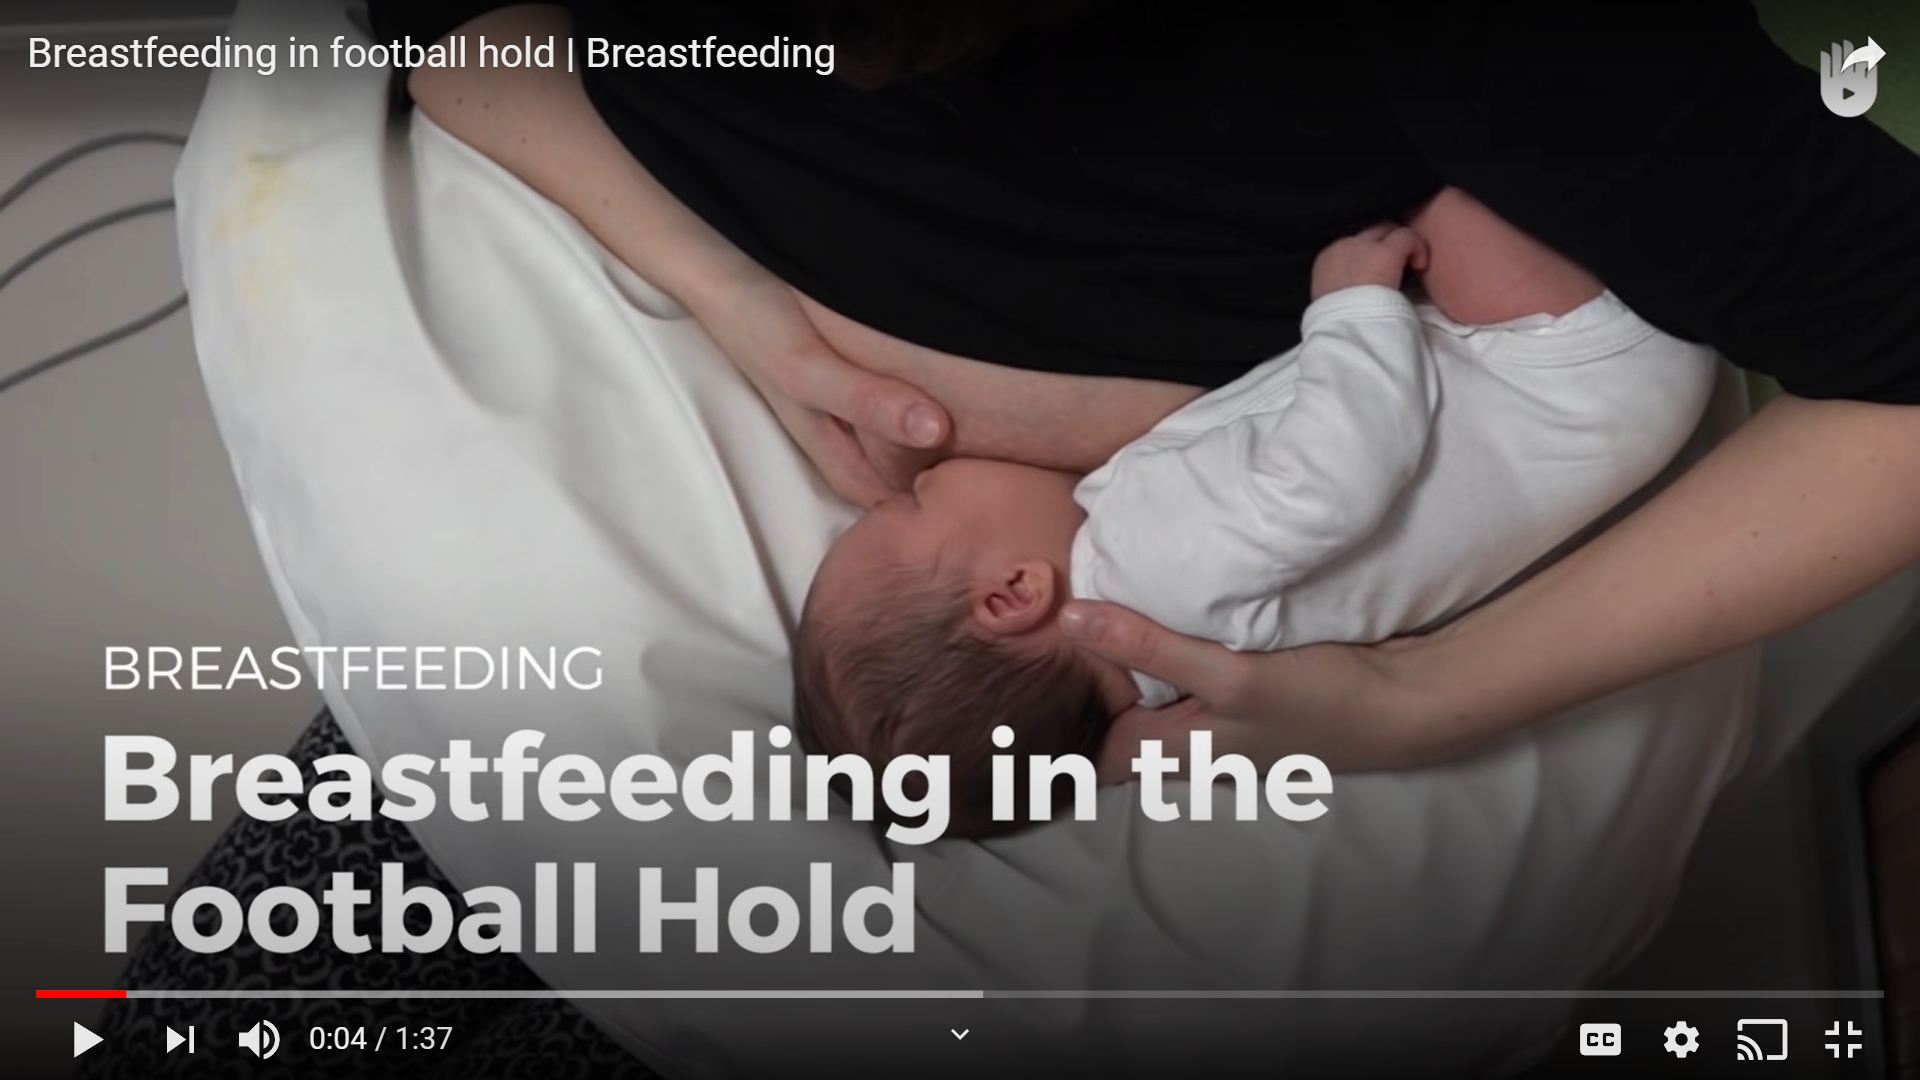 Breastfeeding in the Football Hold